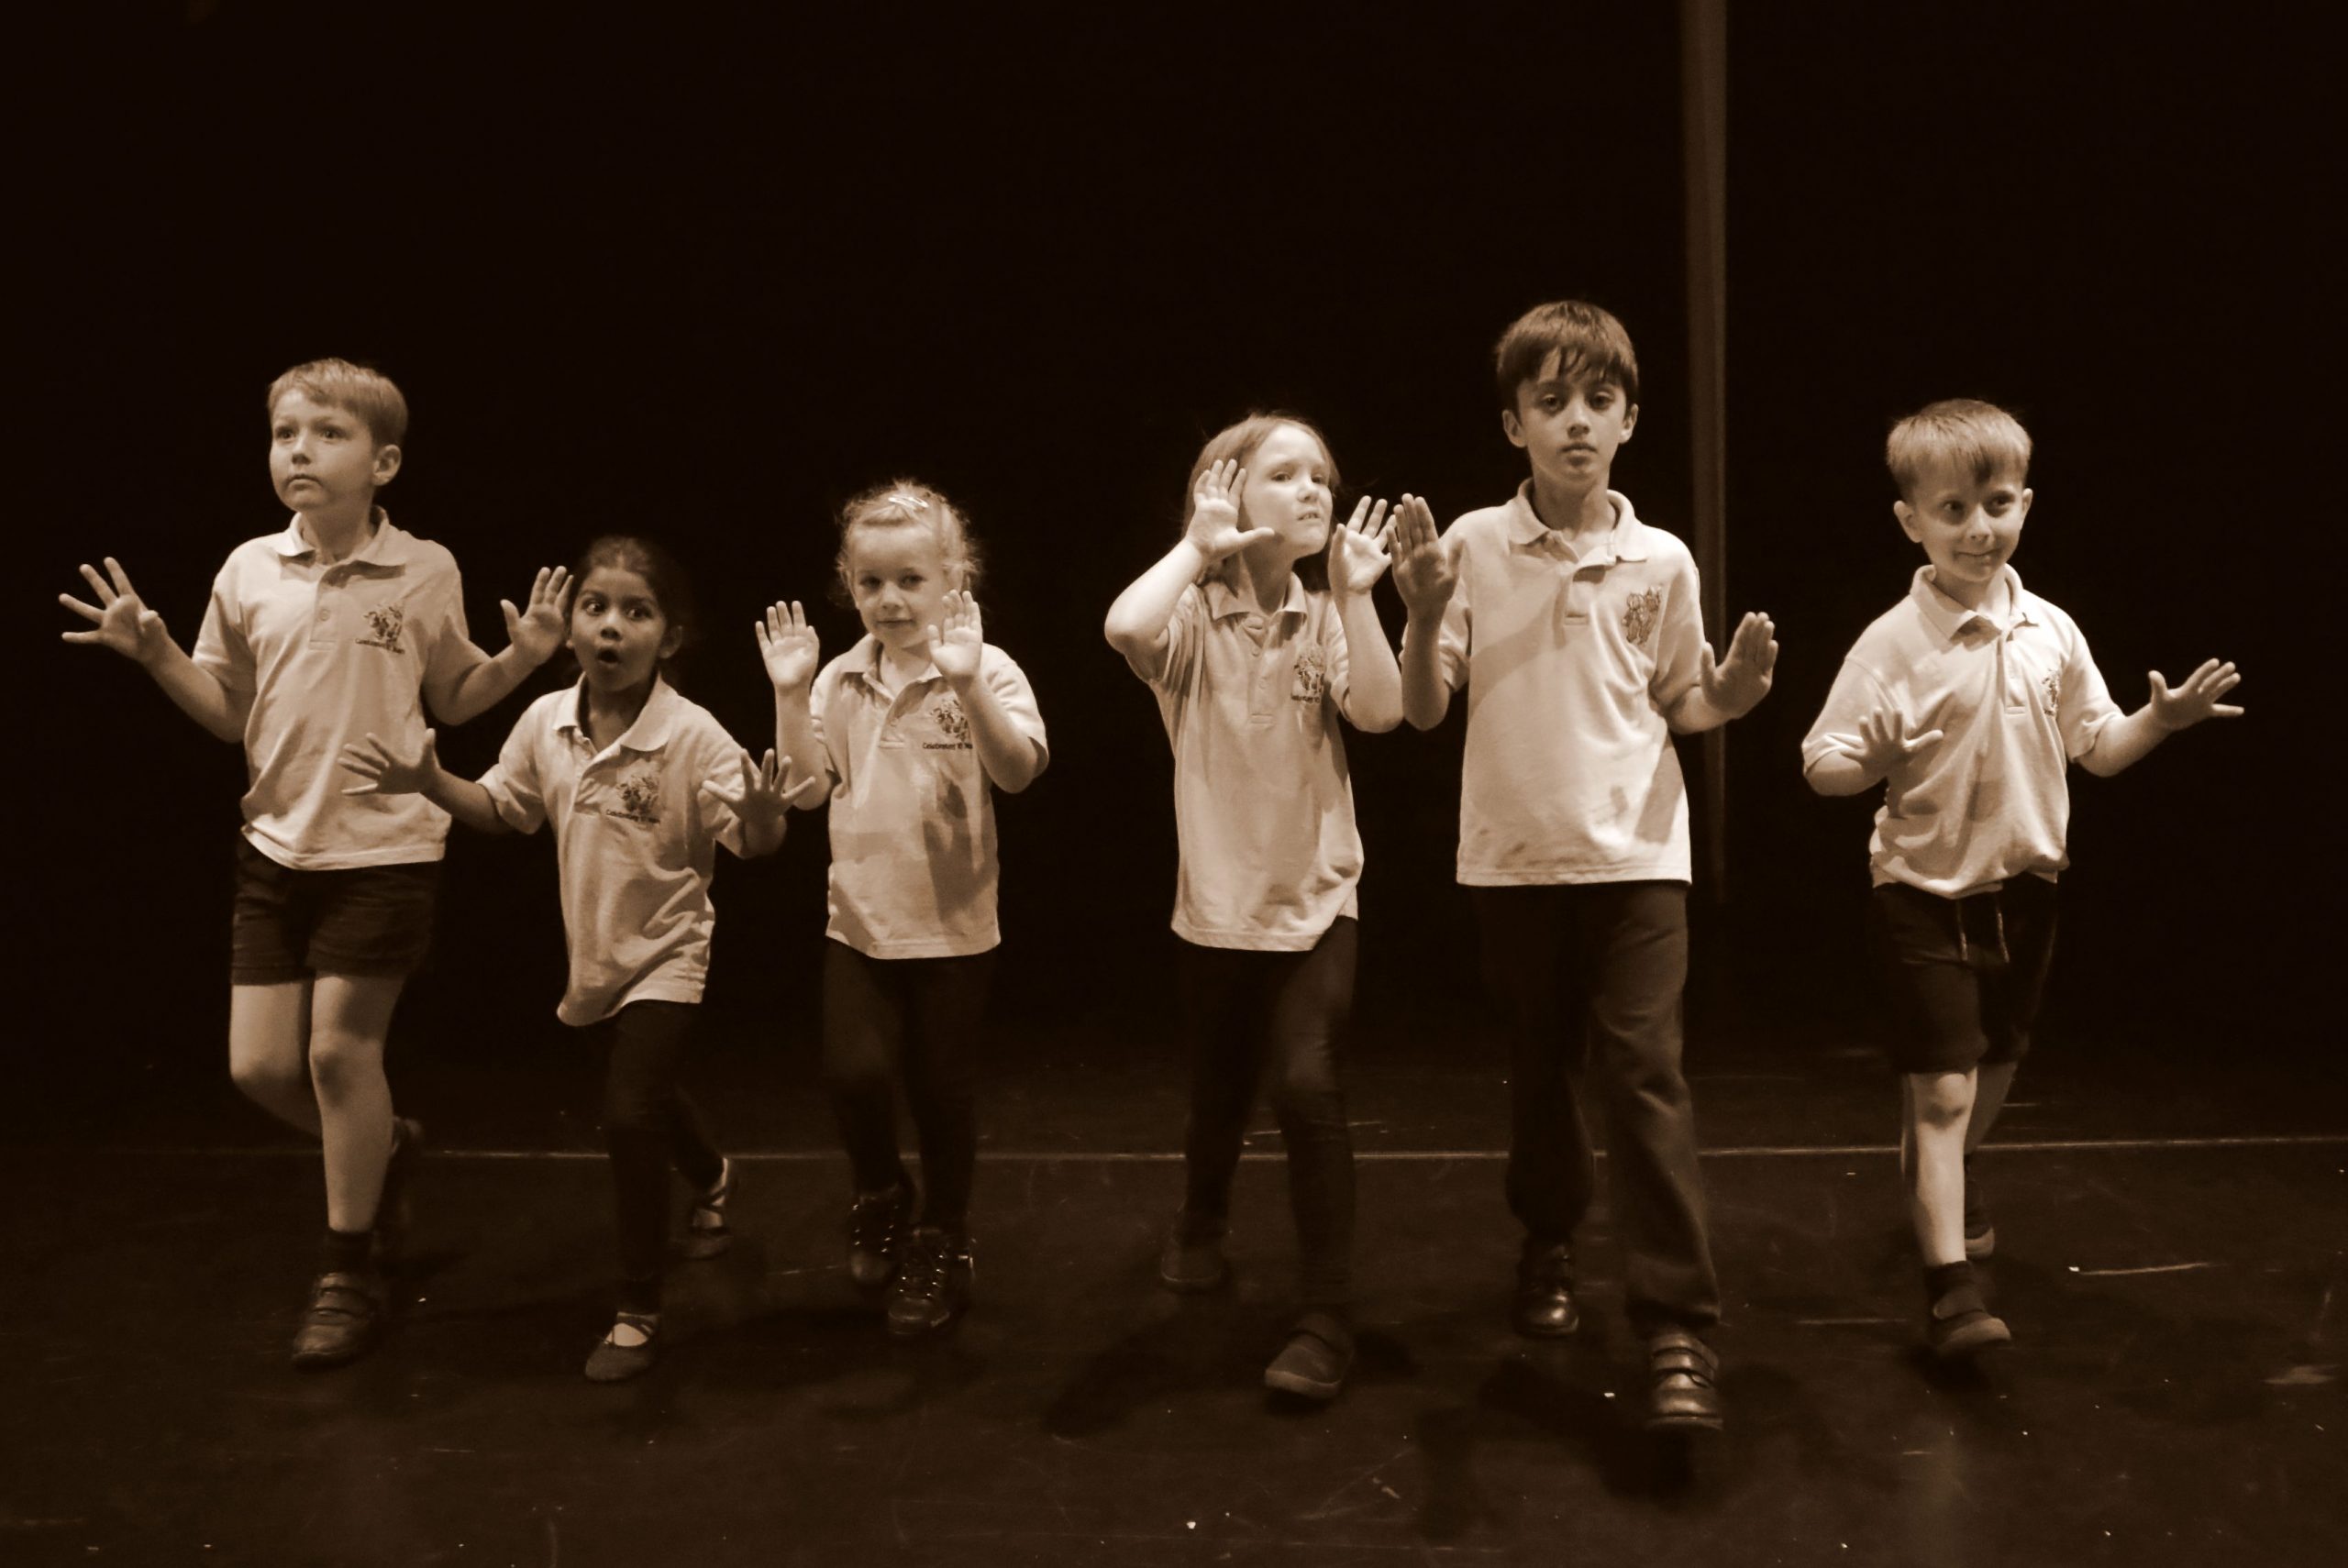 Children in Stageability drama class in Berkshire